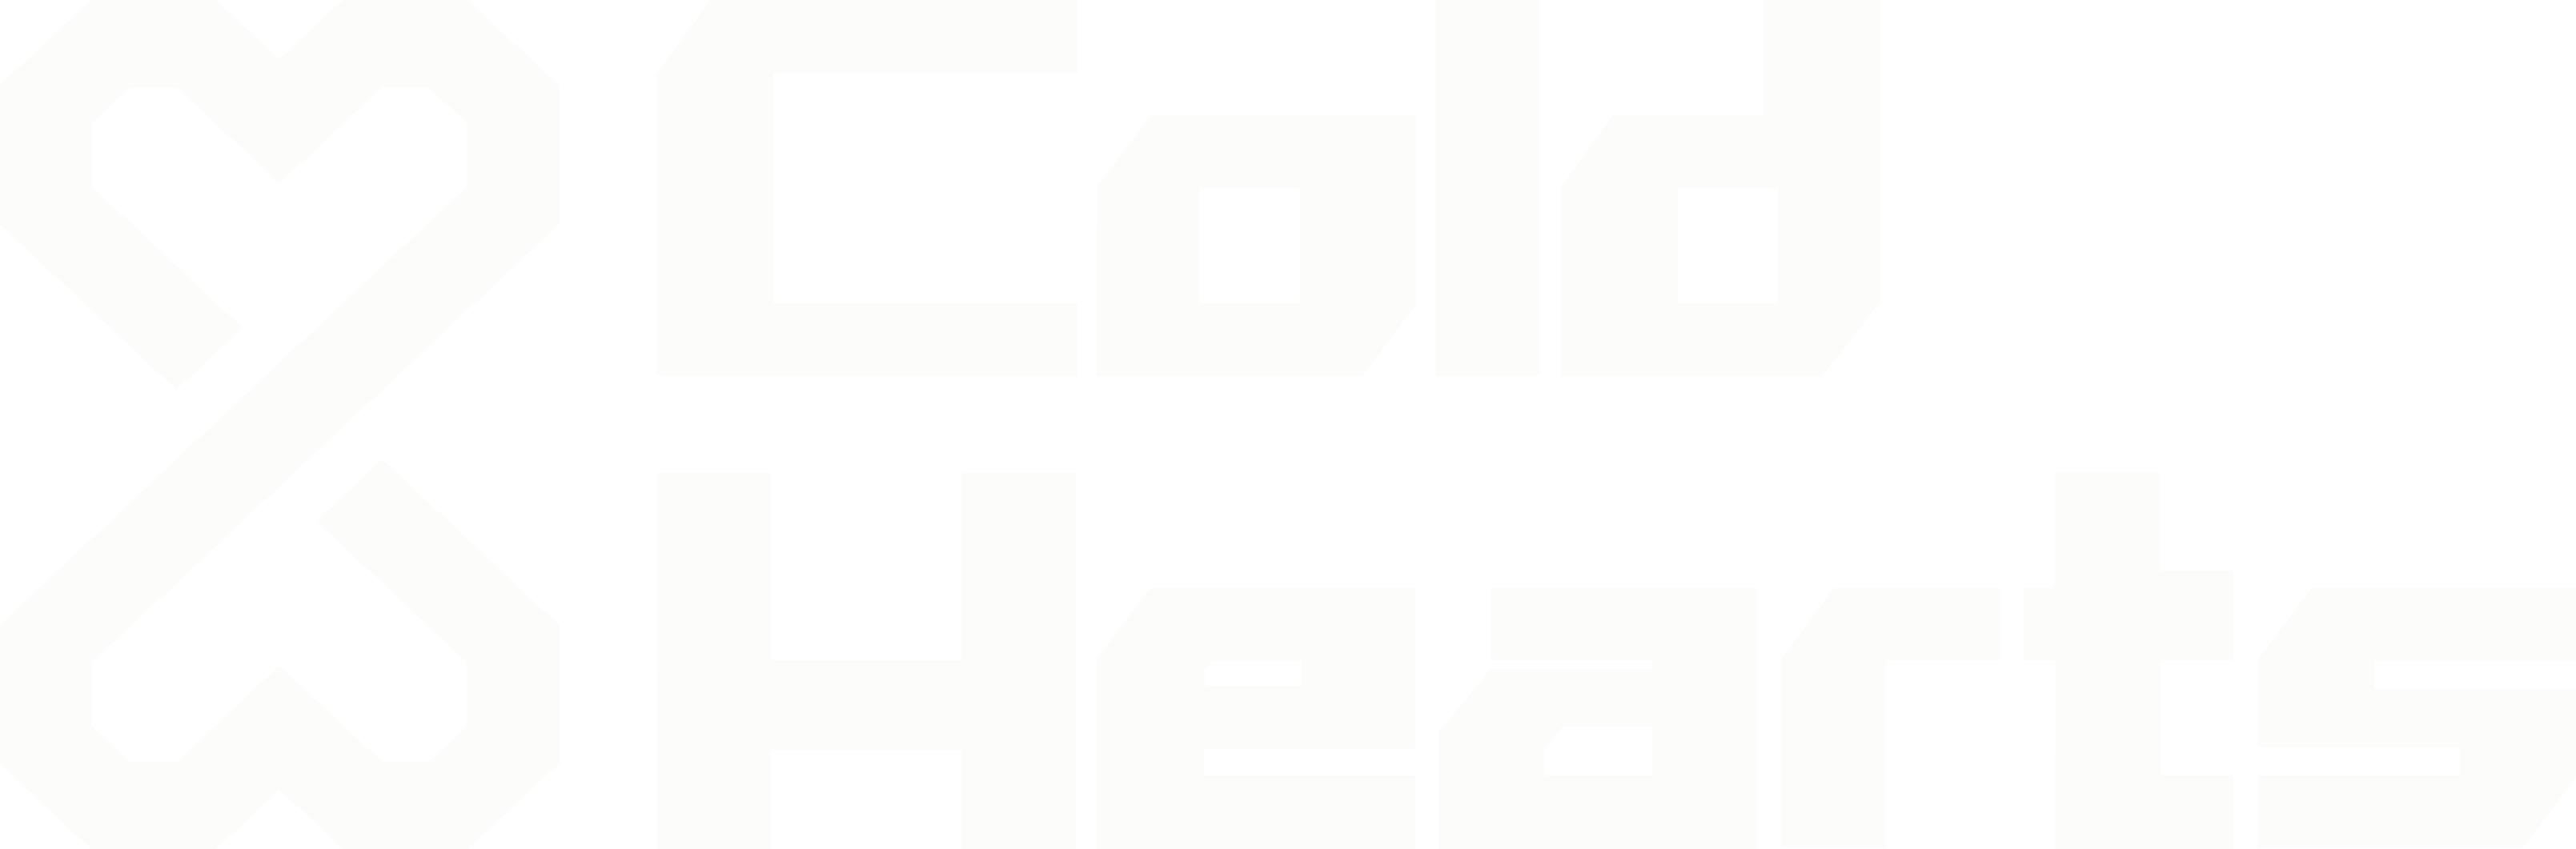 ColdHearts